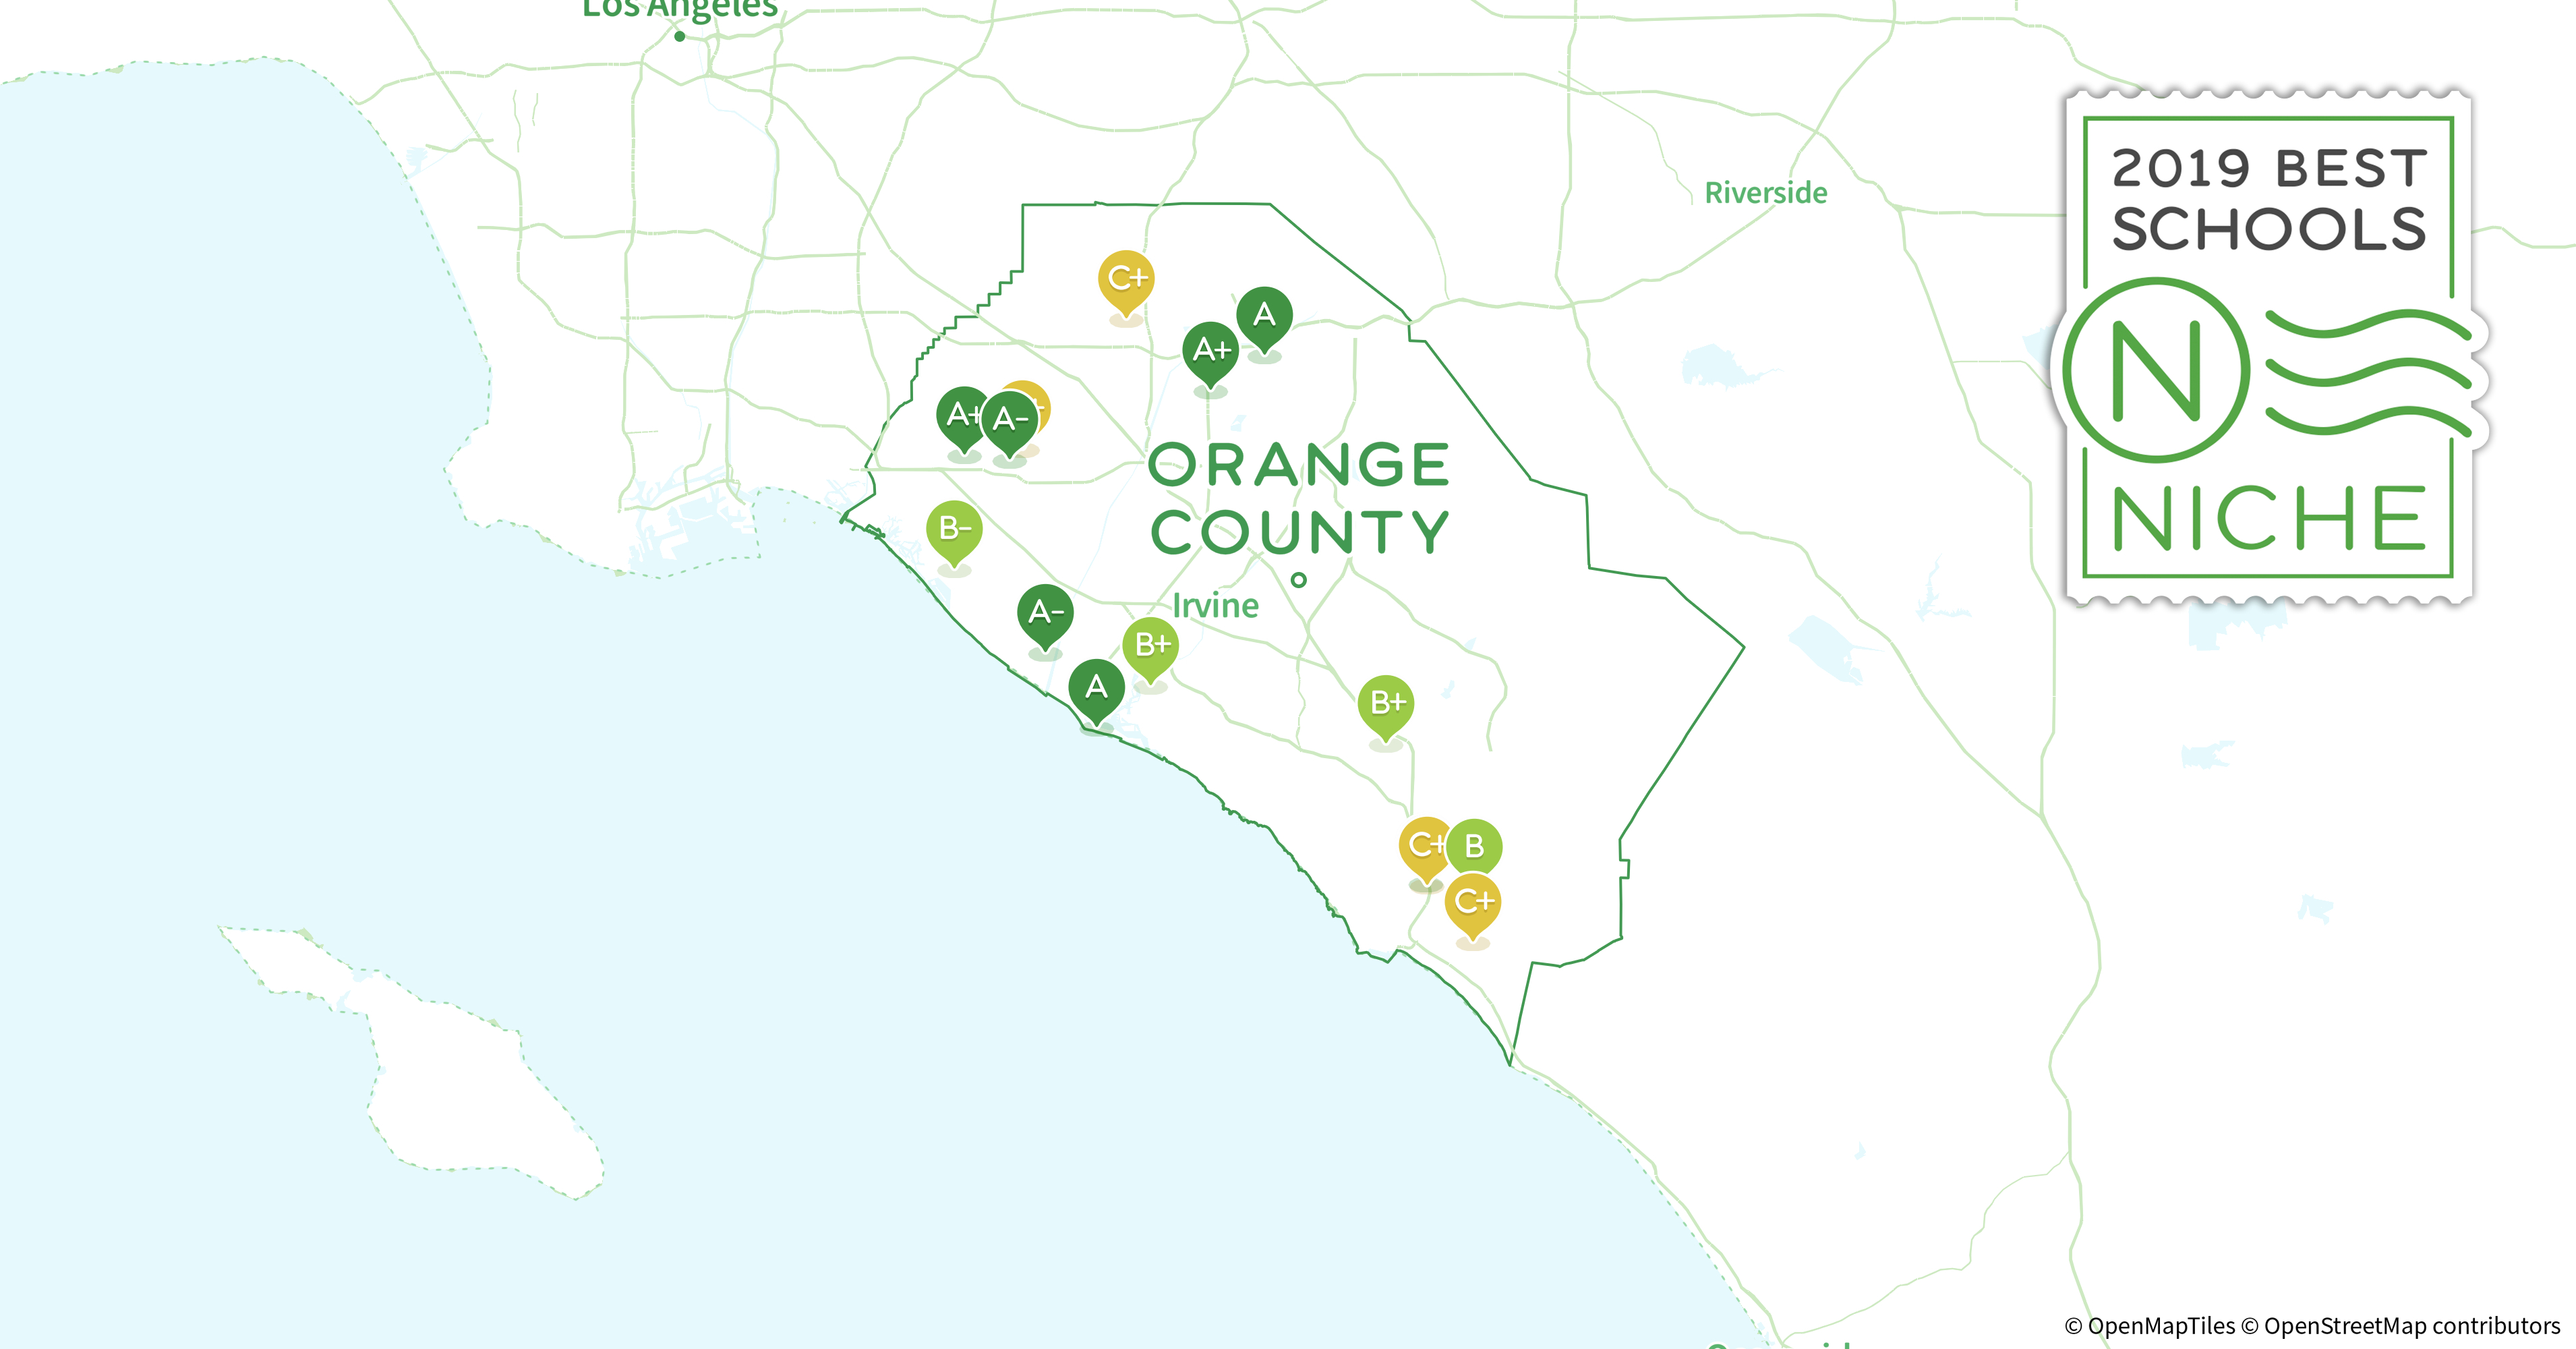 School Districts In Orange County, Ca - Niche - California School District Rankings Map